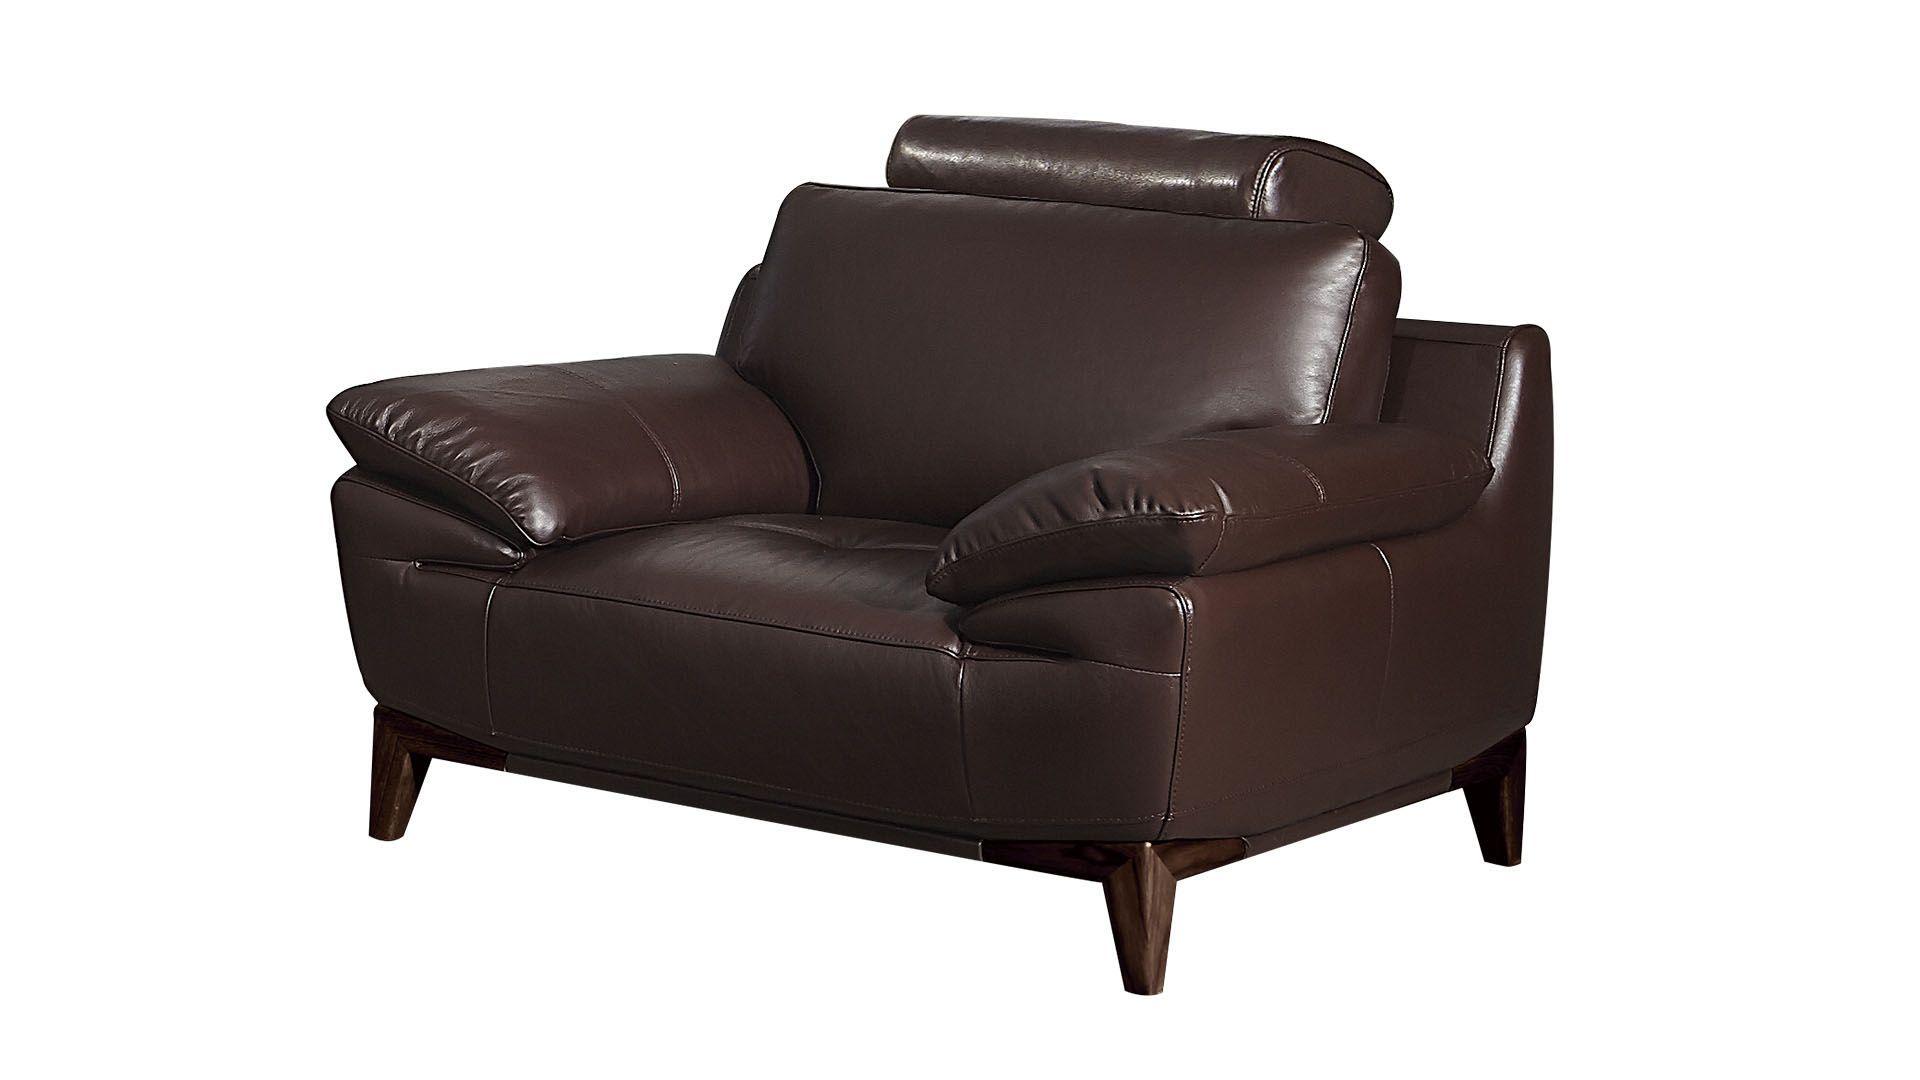 Contemporary, Modern Arm Chair EK028-DC-CHR EK028-DC-CHR in Dark Brown Top grain leather